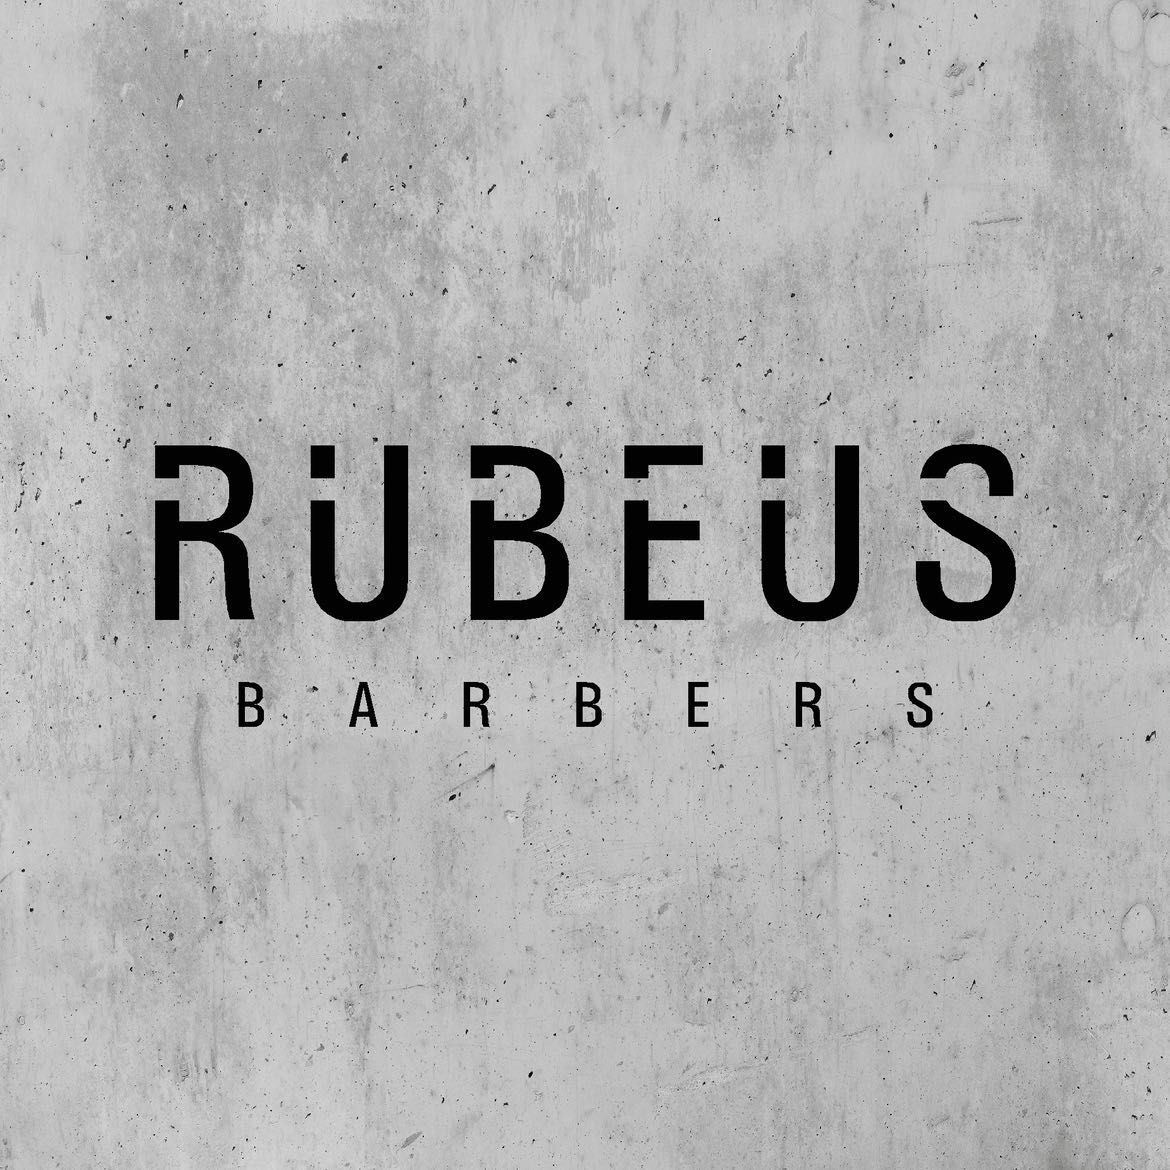 RUBEUS, RUBEUS, (Above Wilson & rogers), OL4 3PD, Oldham